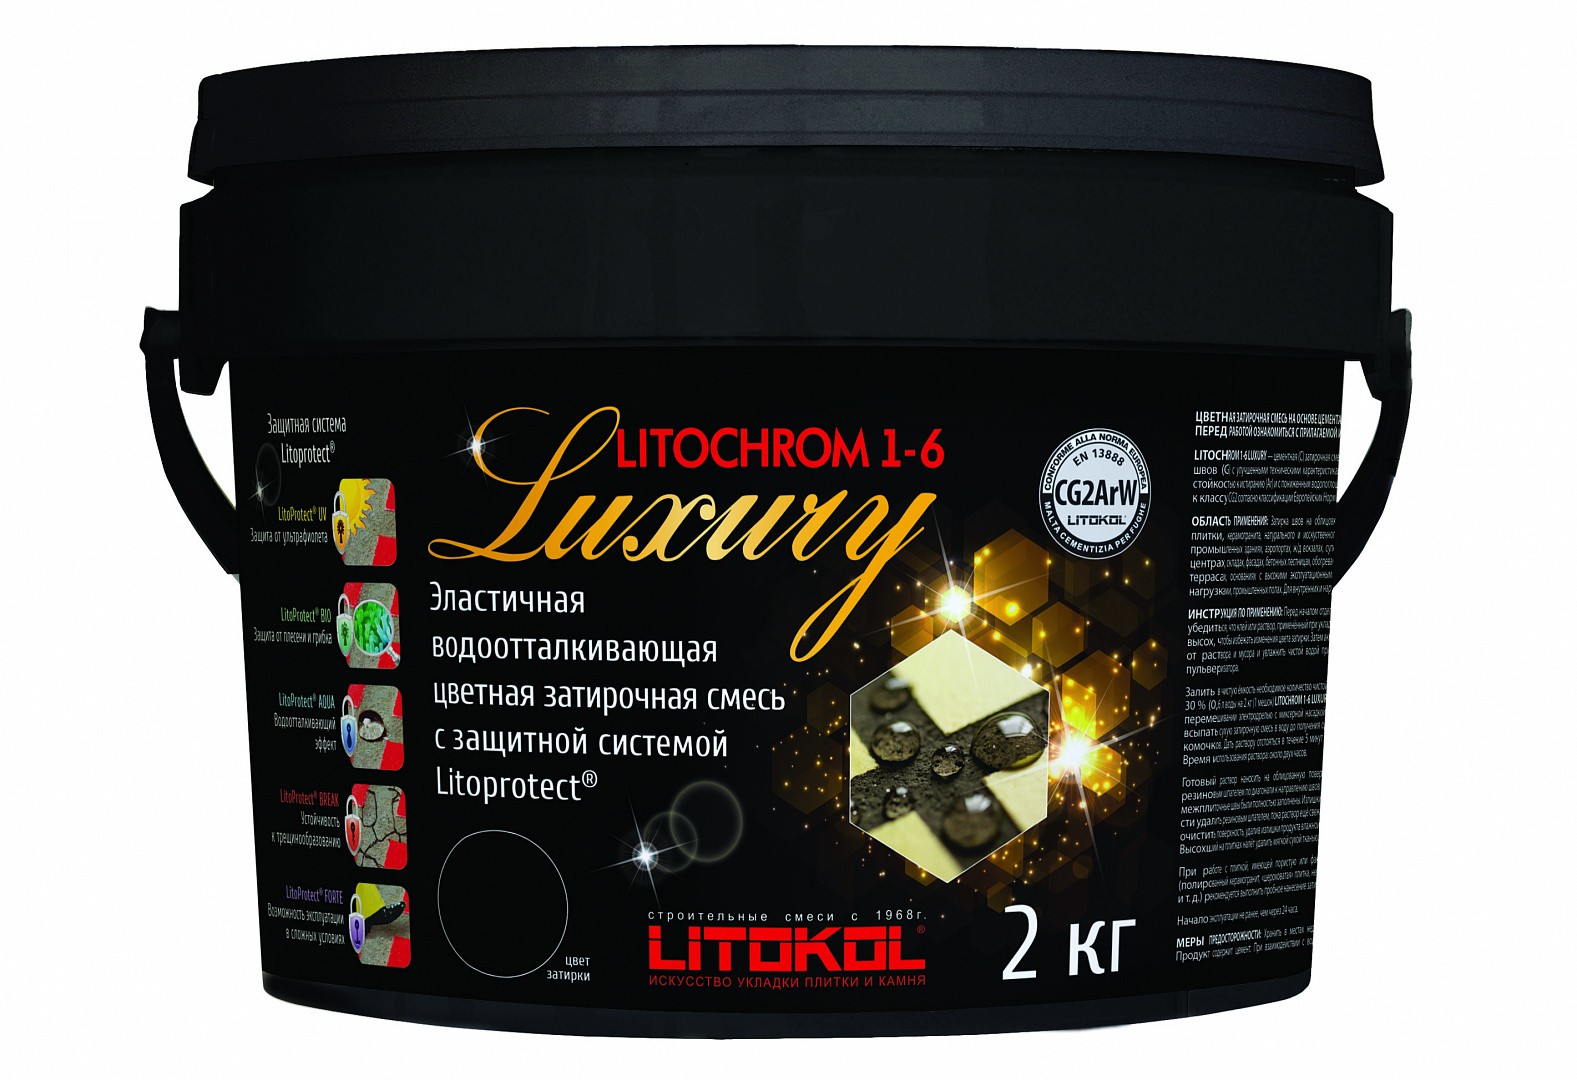 Цементная затирочная смесь LITOCHROM 1-6 LUXURY C.40